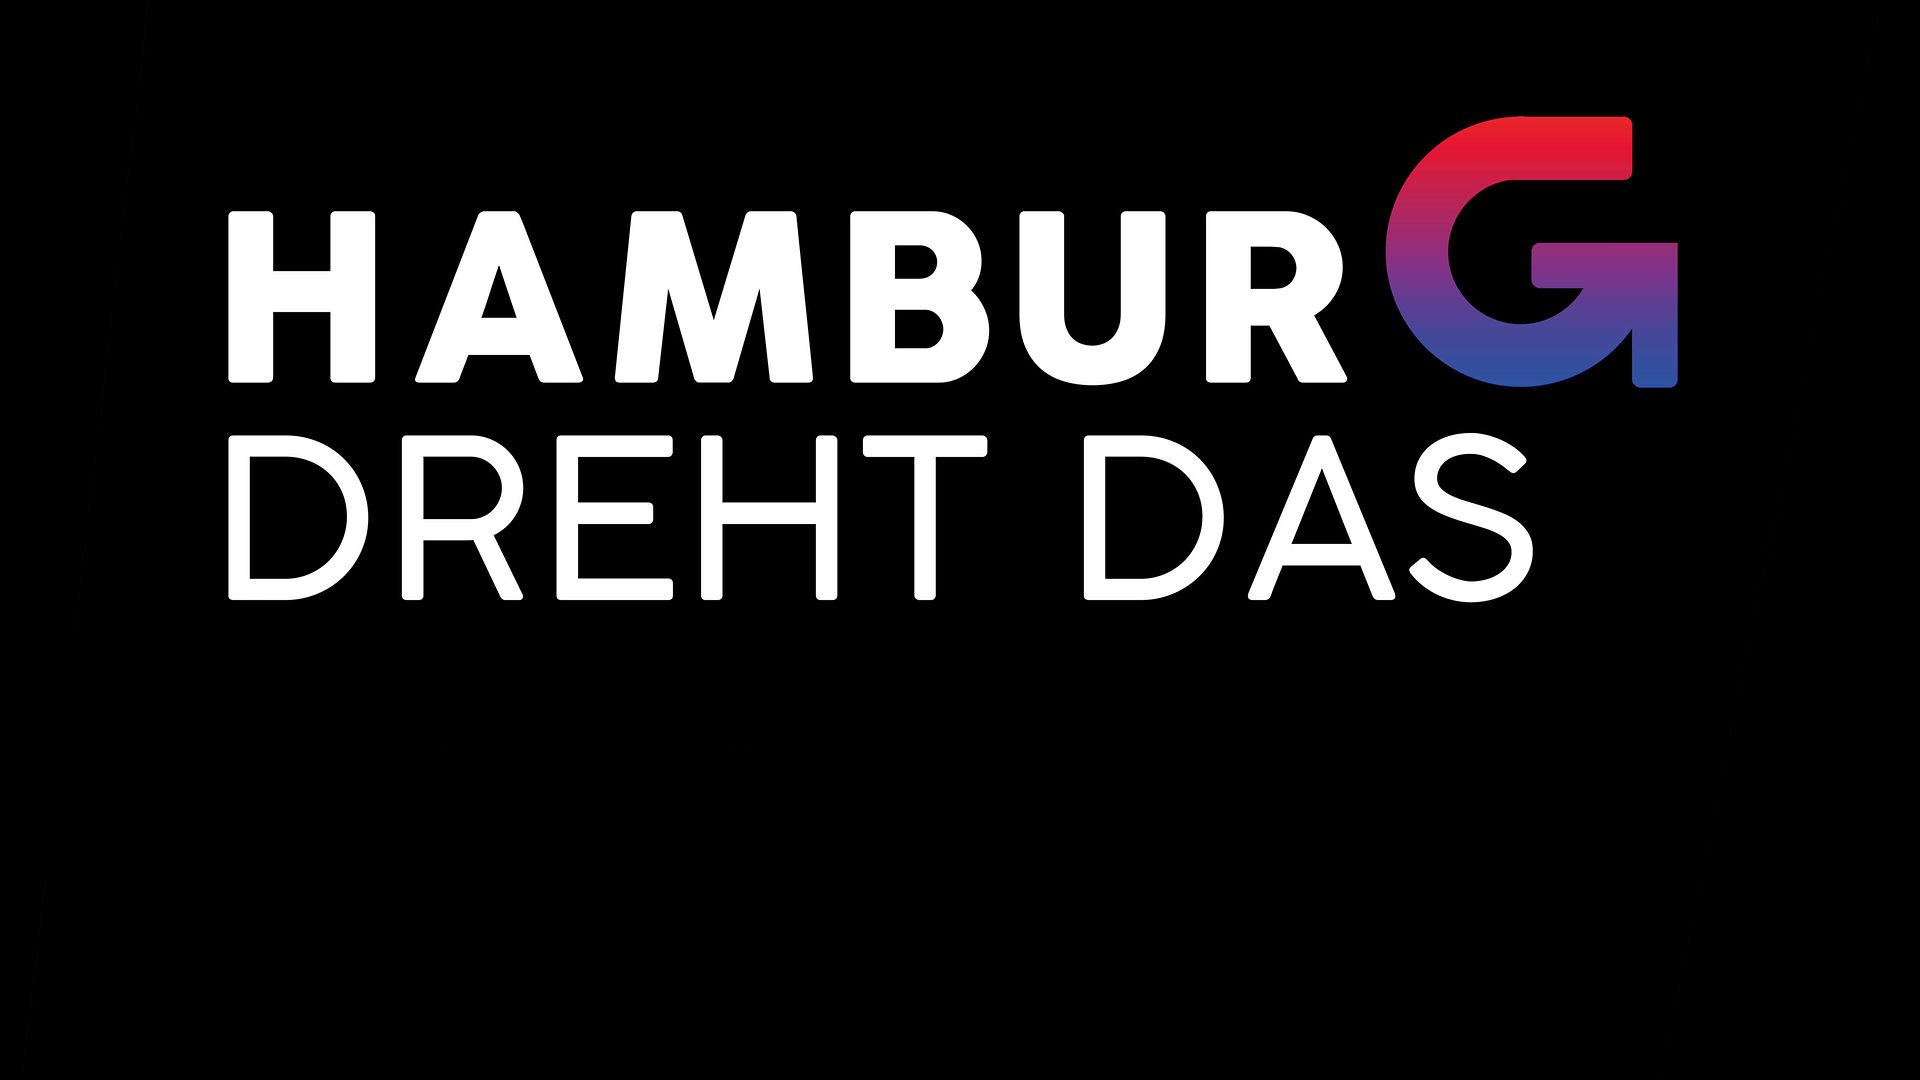 Hamburg-dreht-das_Wortbildmarke_Schwarz_B_RGB